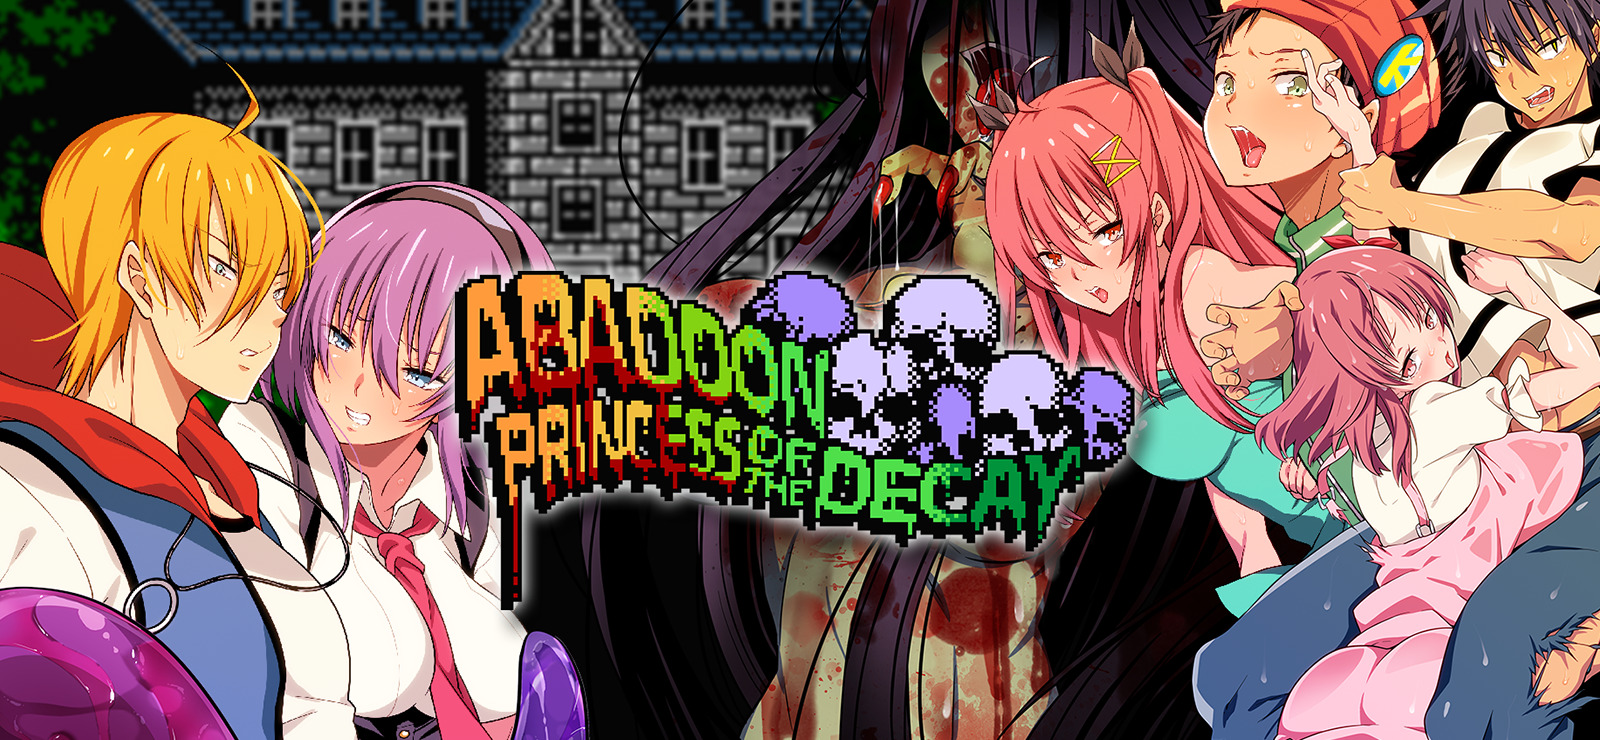 30% Abaddon: Princess of the Decay on GOG.com